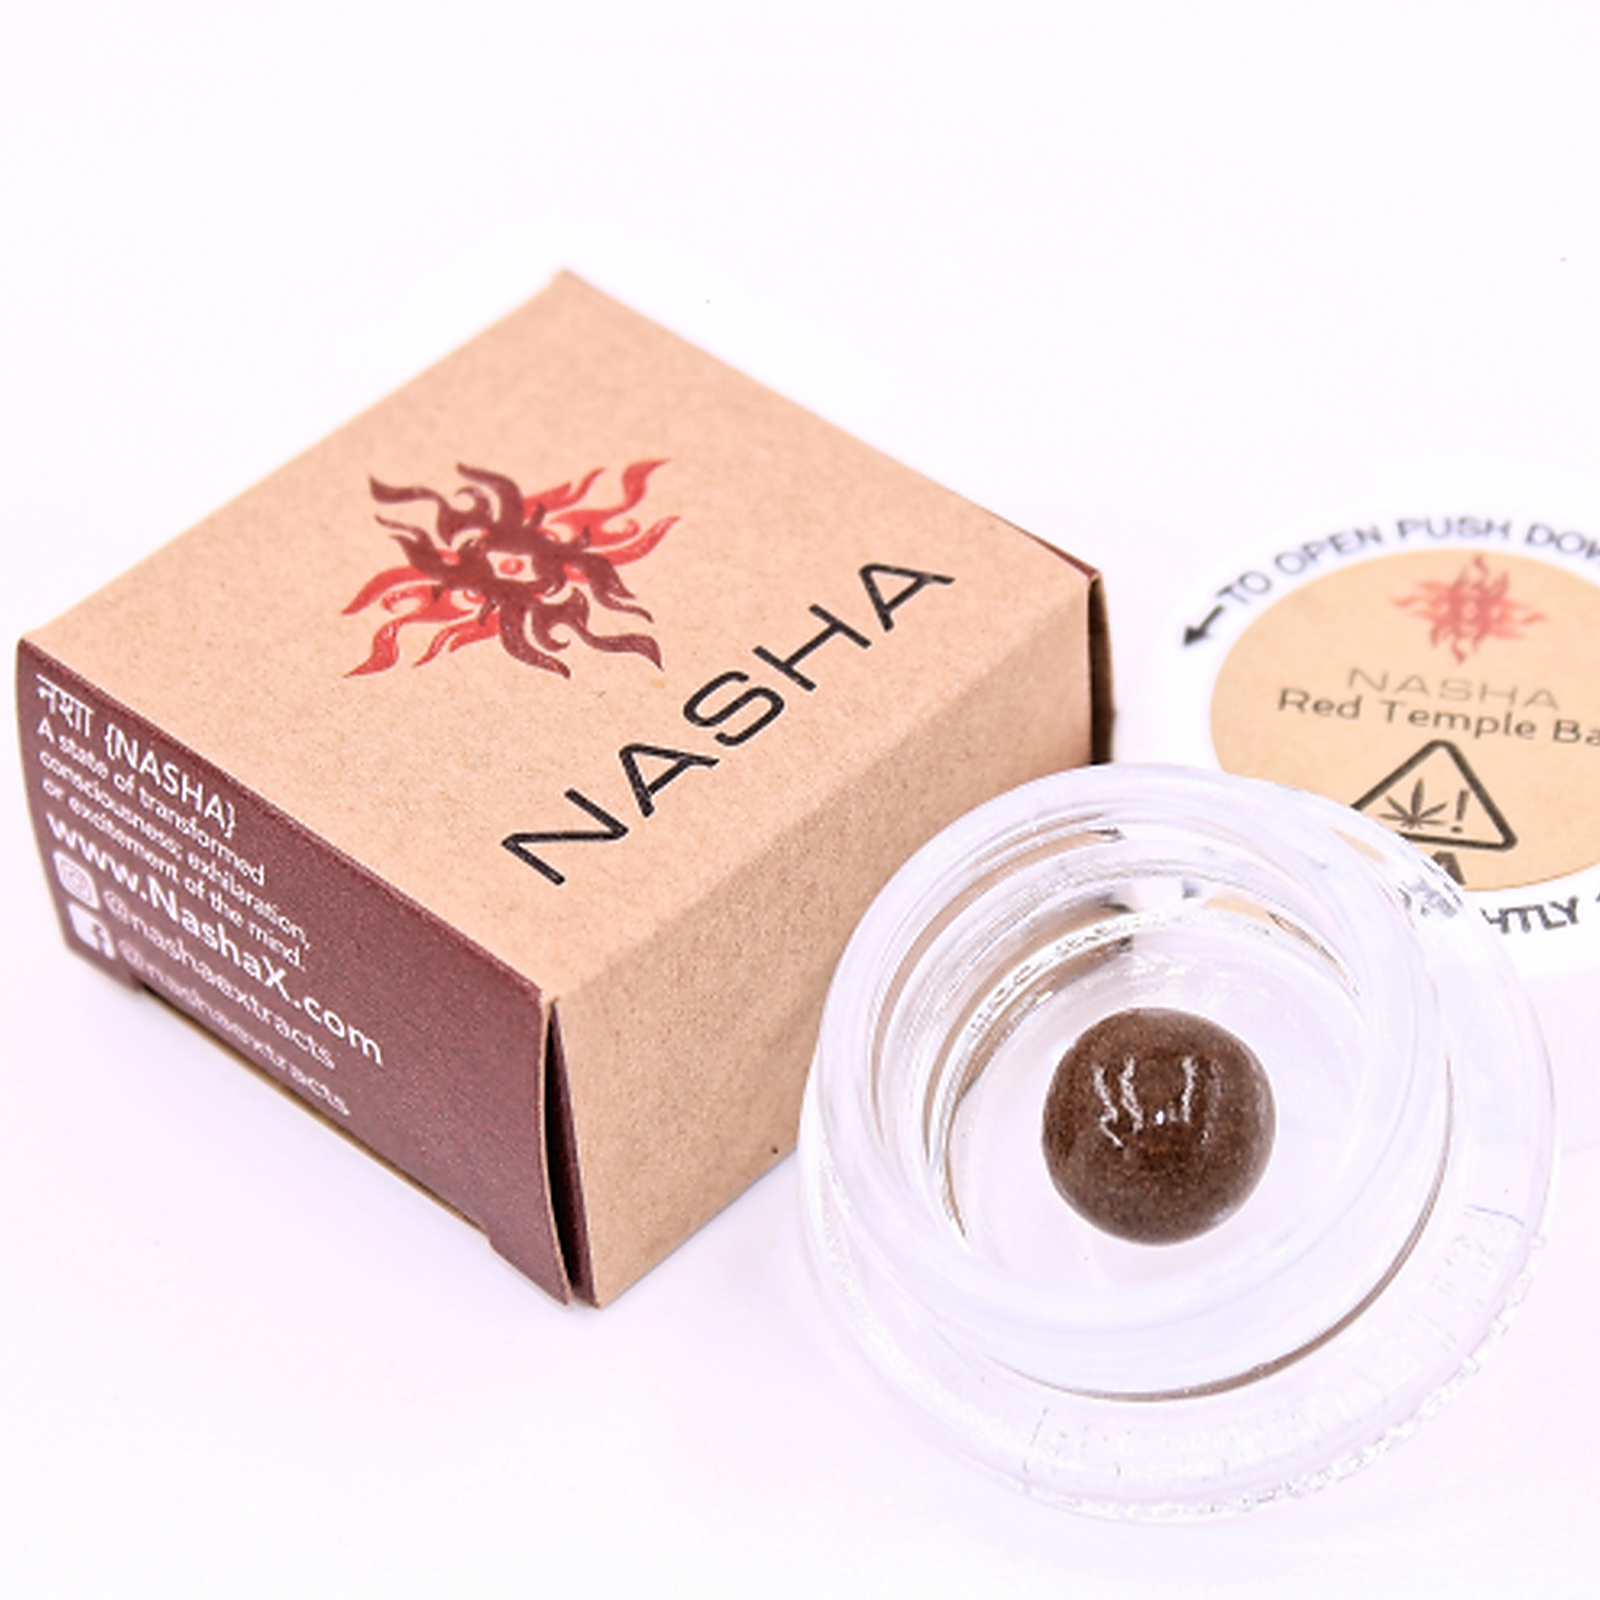 Papaya Bomb Live Rosin Cold Cure 1g — Nasha Hash